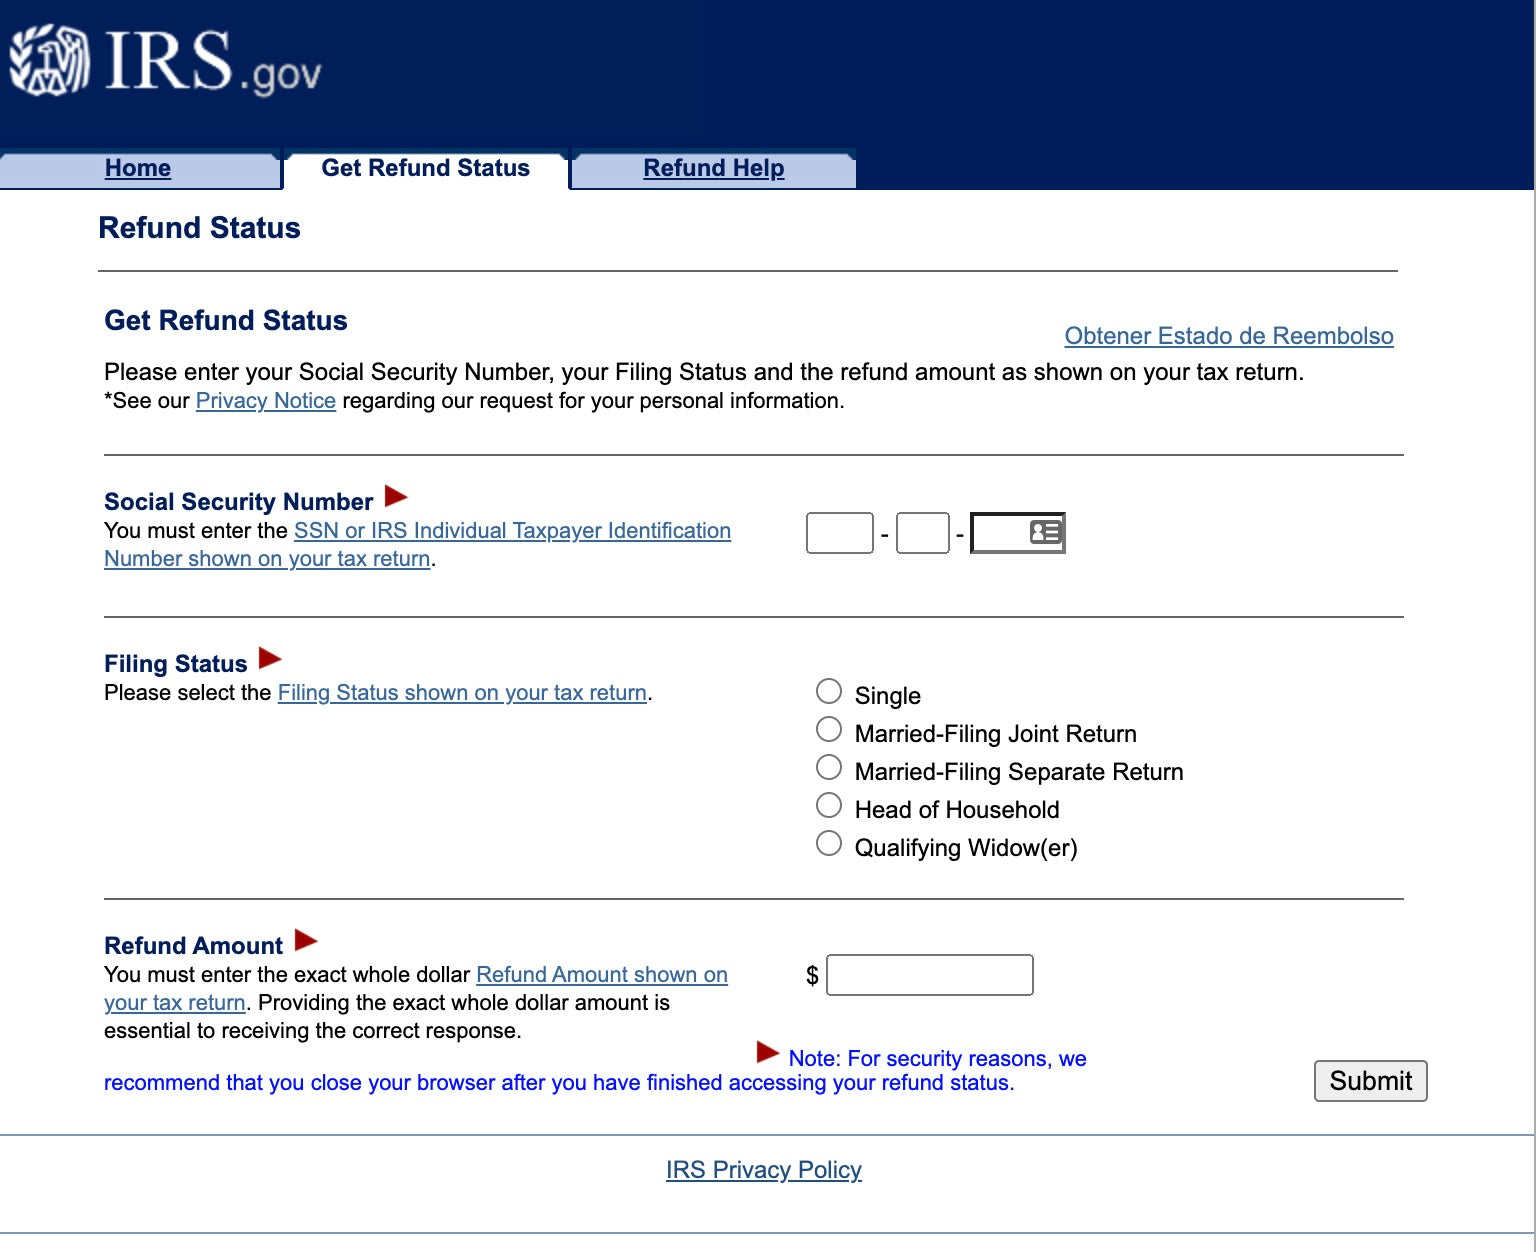 IRS "Refund Status" tool